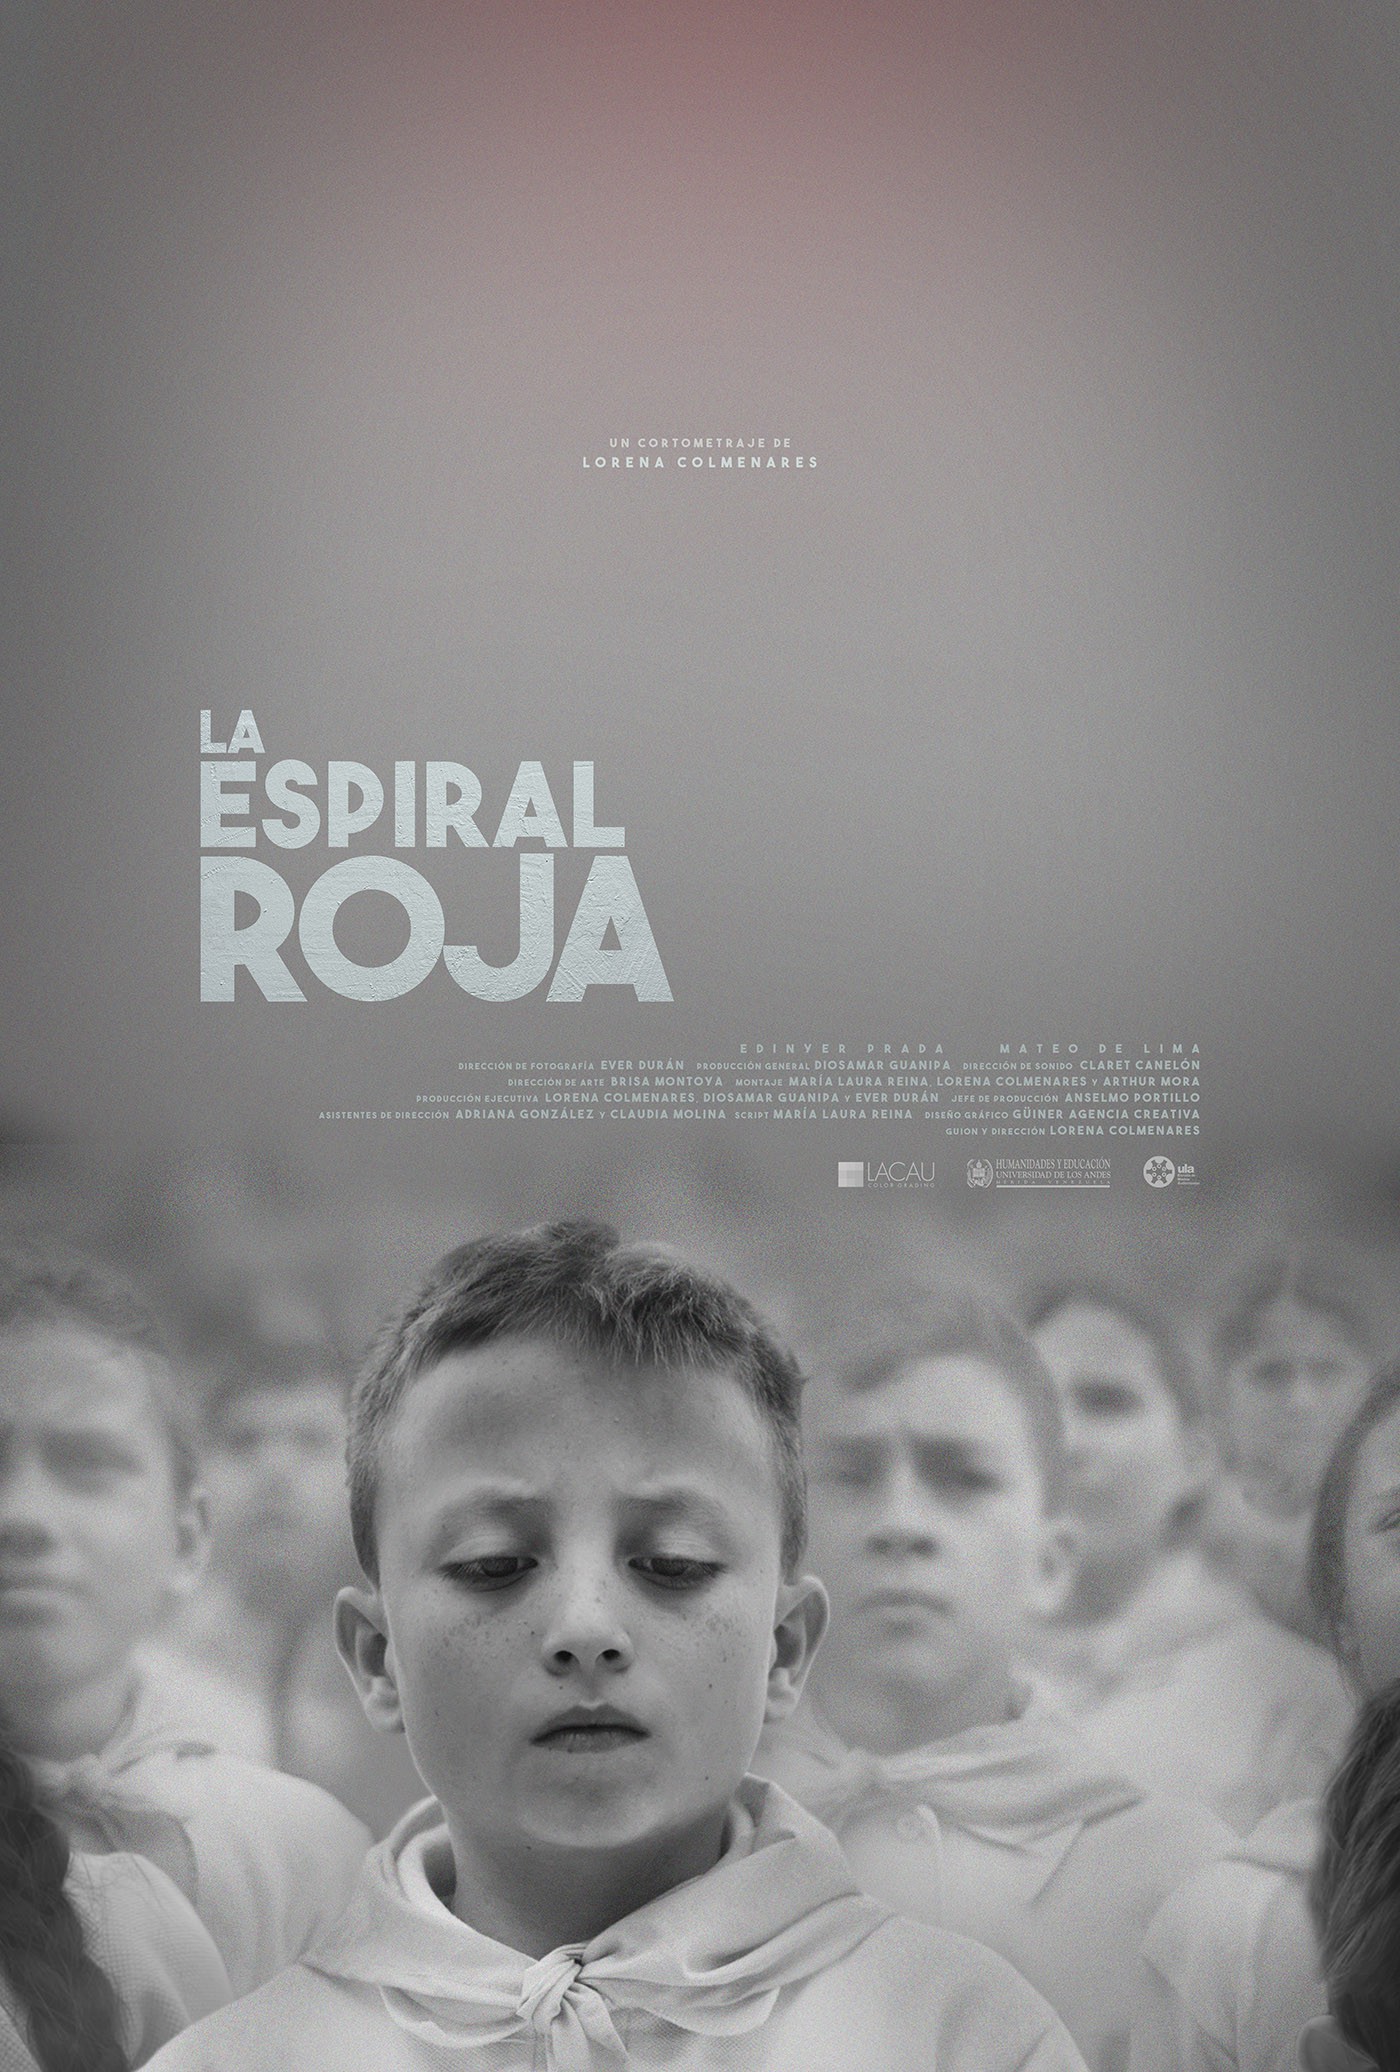 Mega Sized Movie Poster Image for La espiral roja